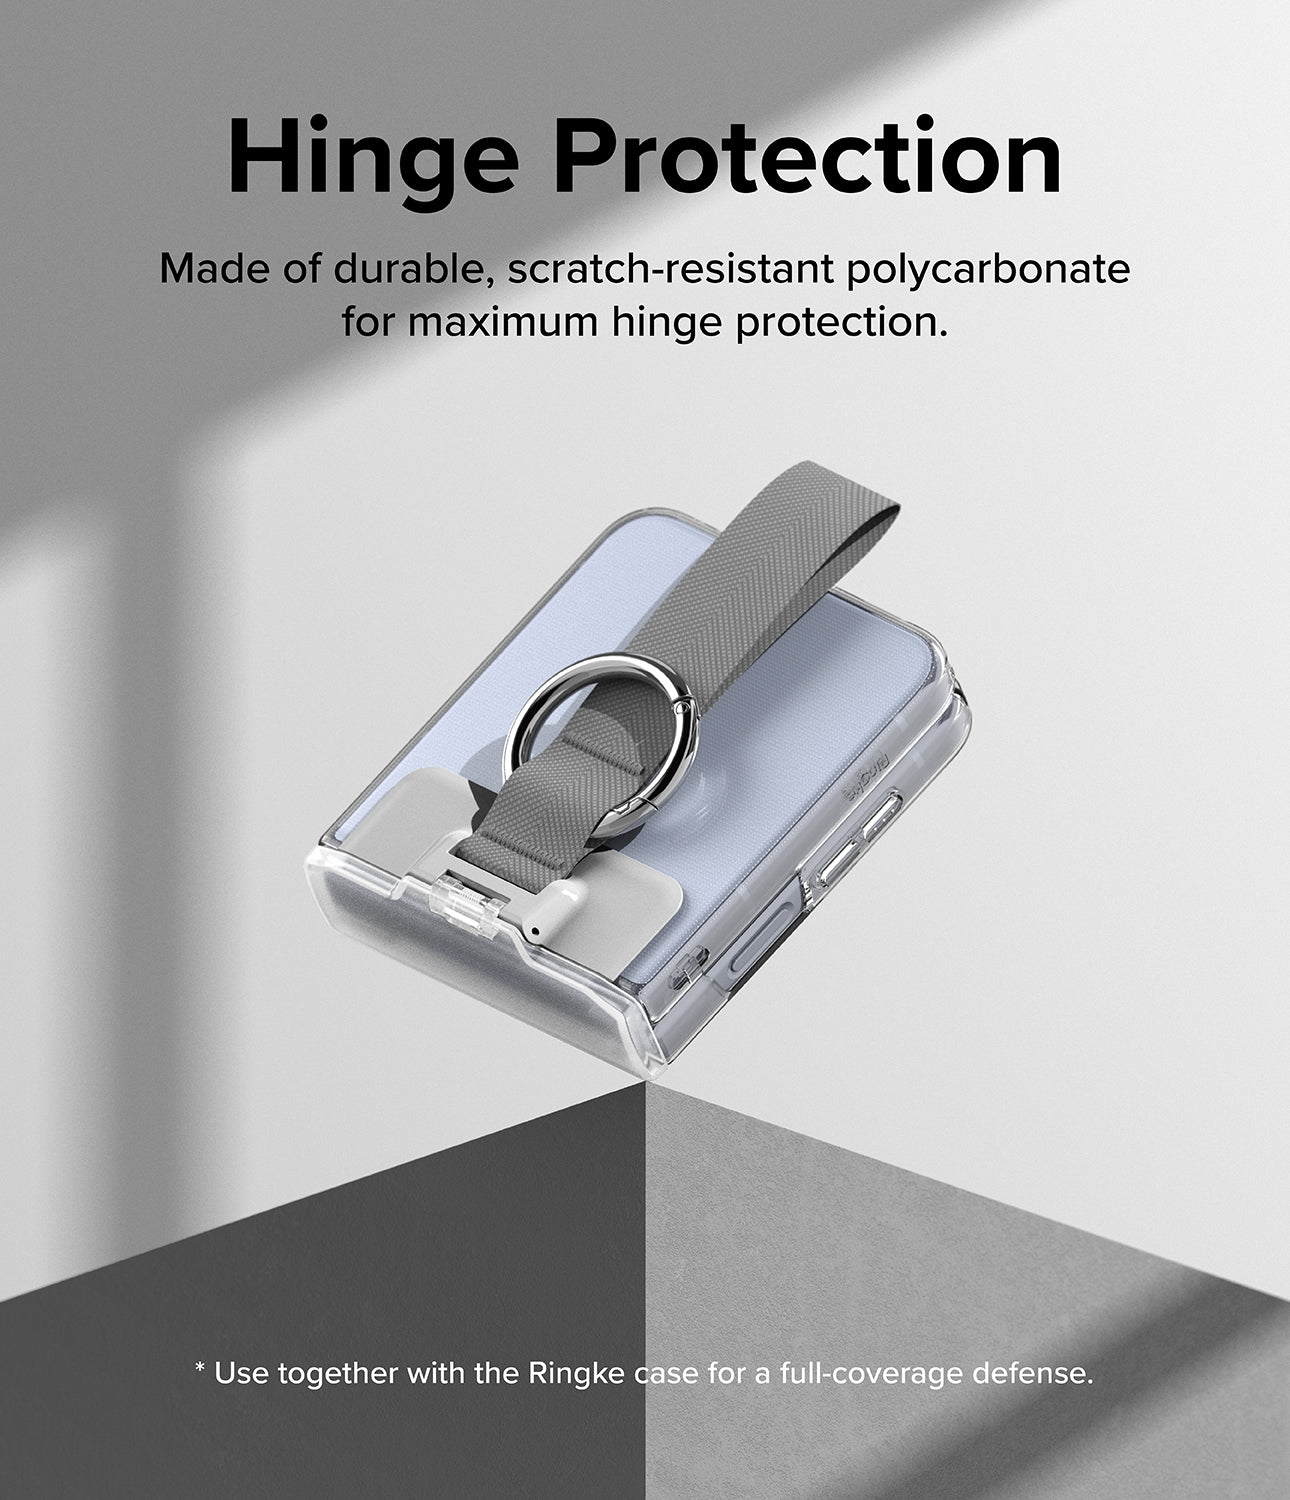 Hinge Protection